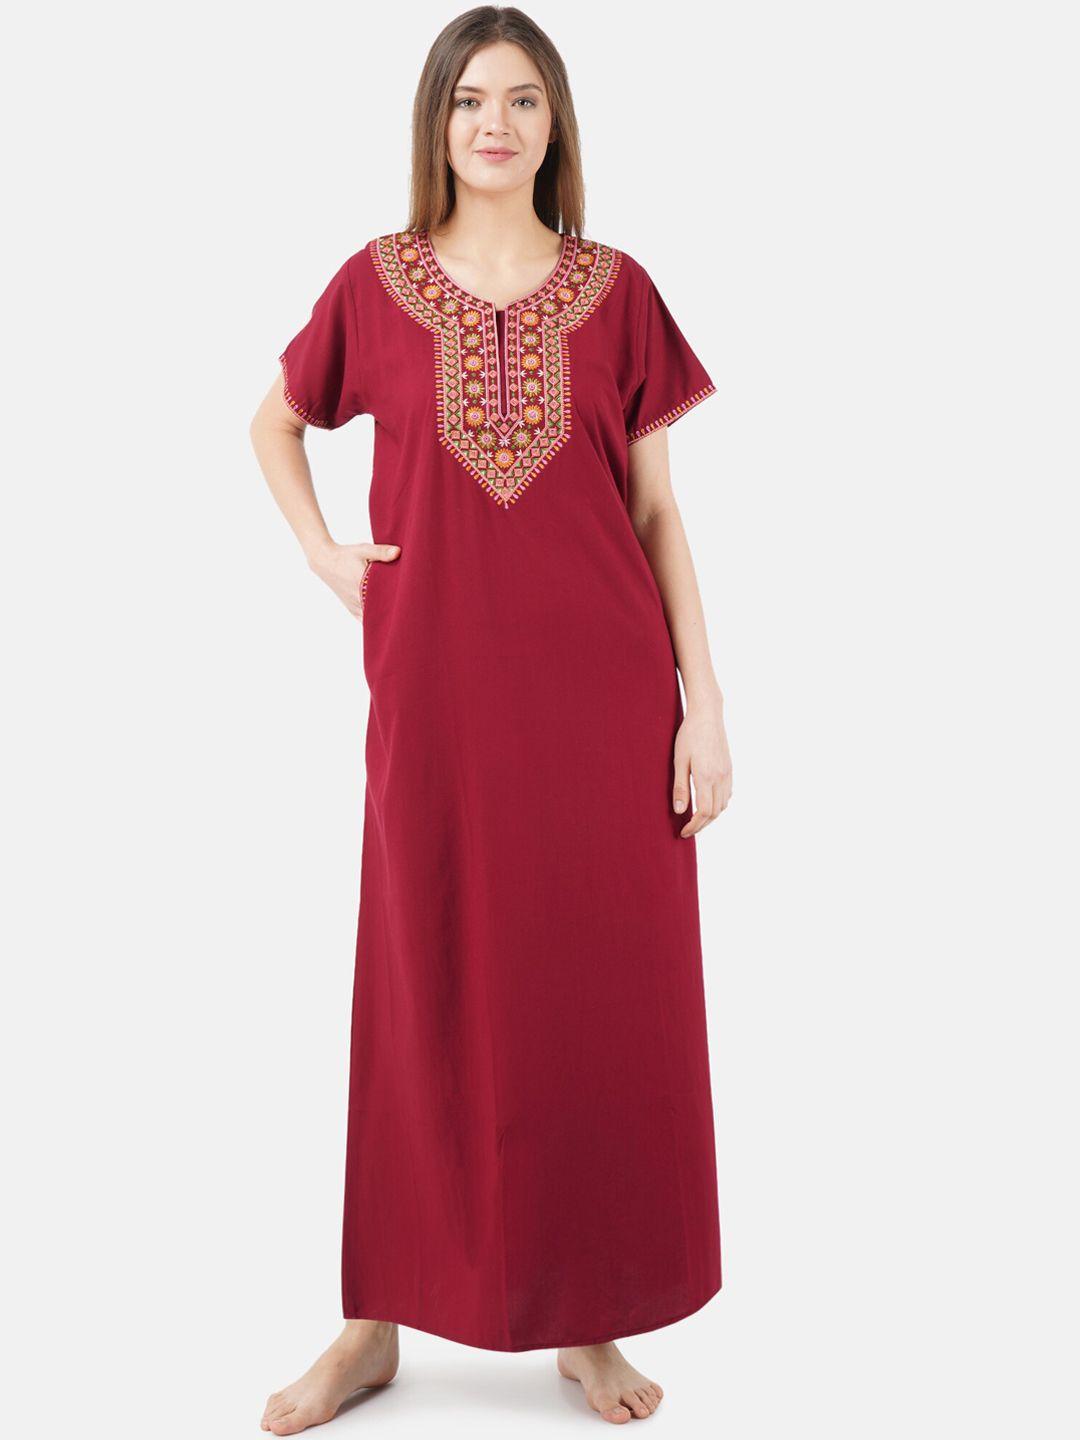 koi sleepwear woman maroon & pink cotton embroidered maxi nightdress